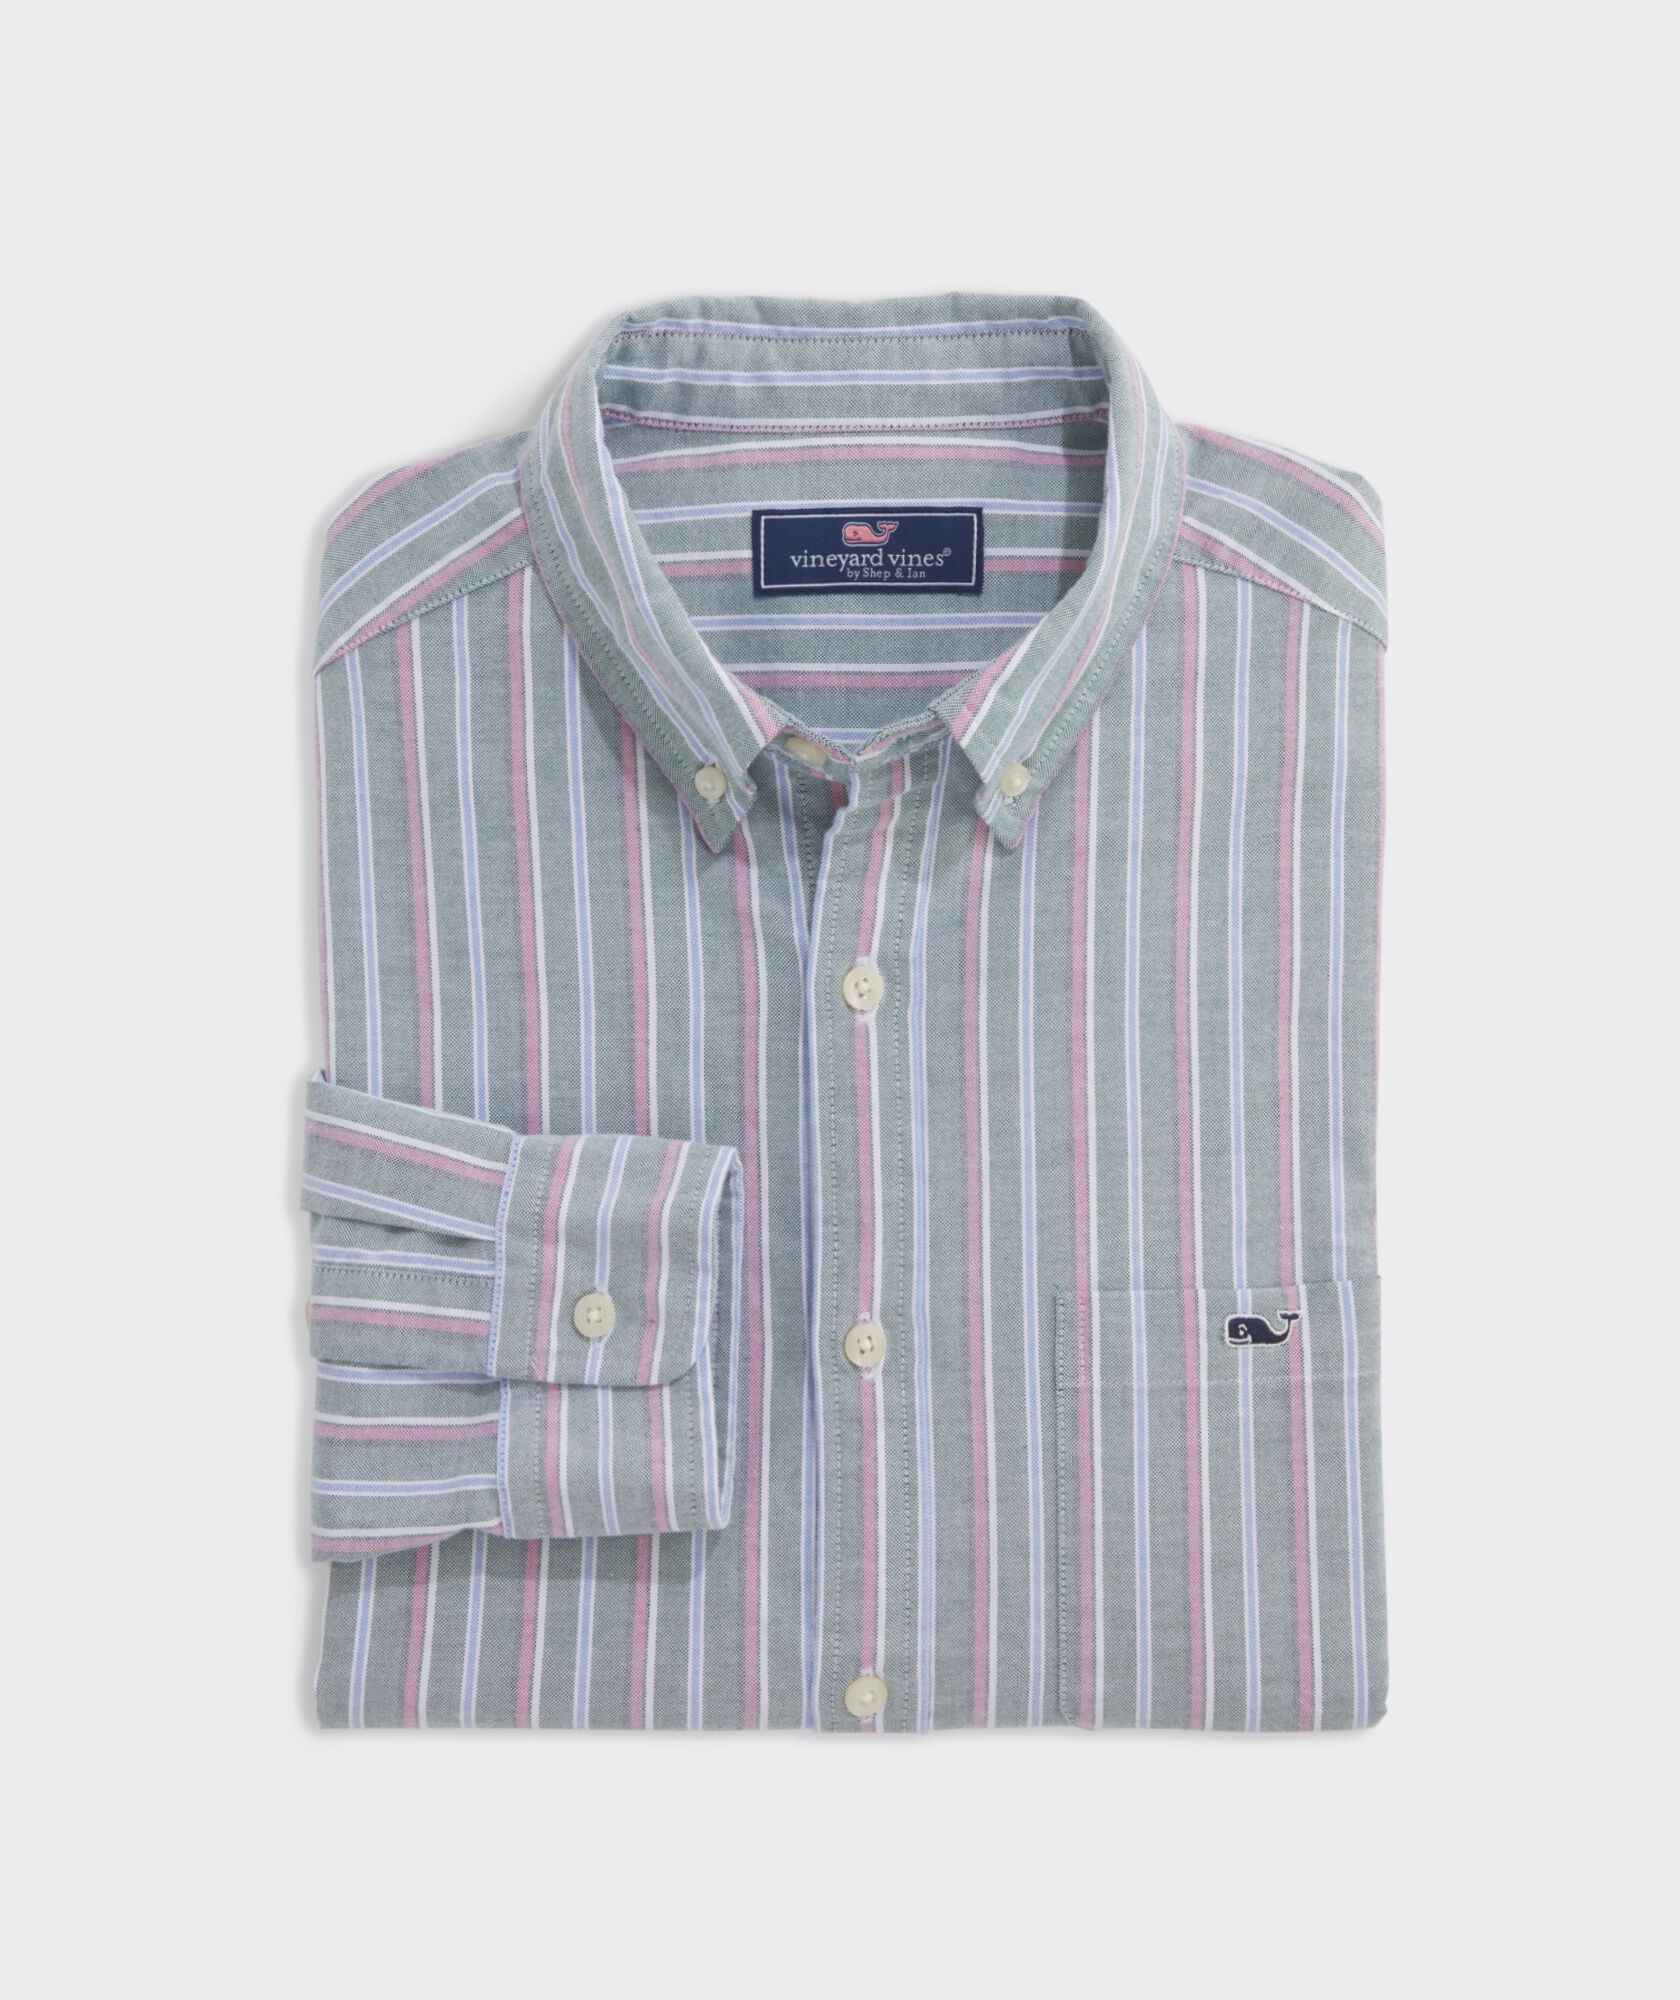 Shop Oxford Stripe Shirt at vineyard vines